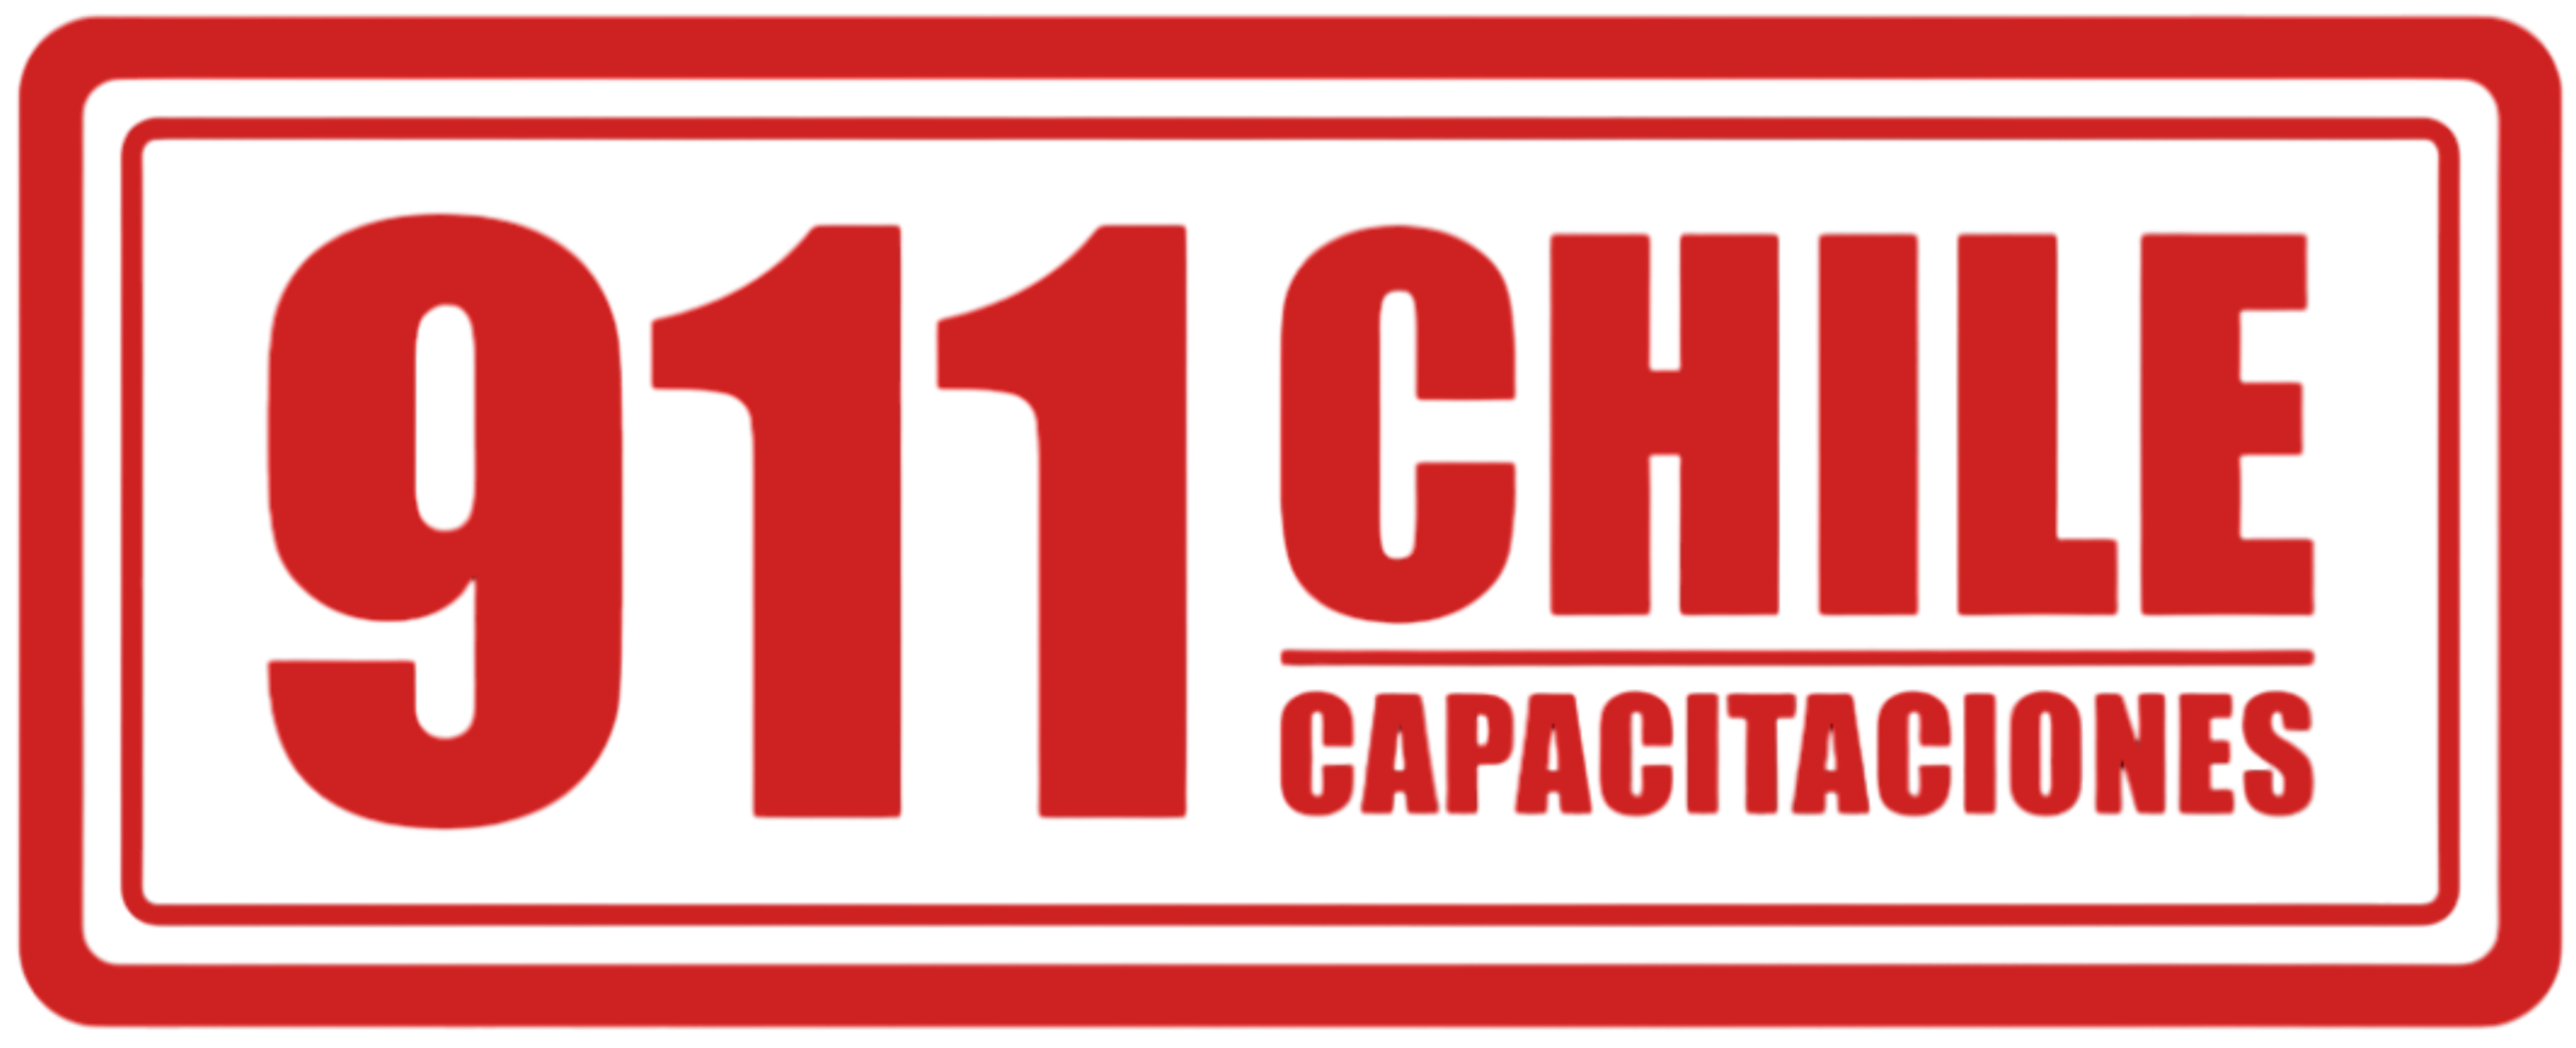 911 Chile Capacitaciones